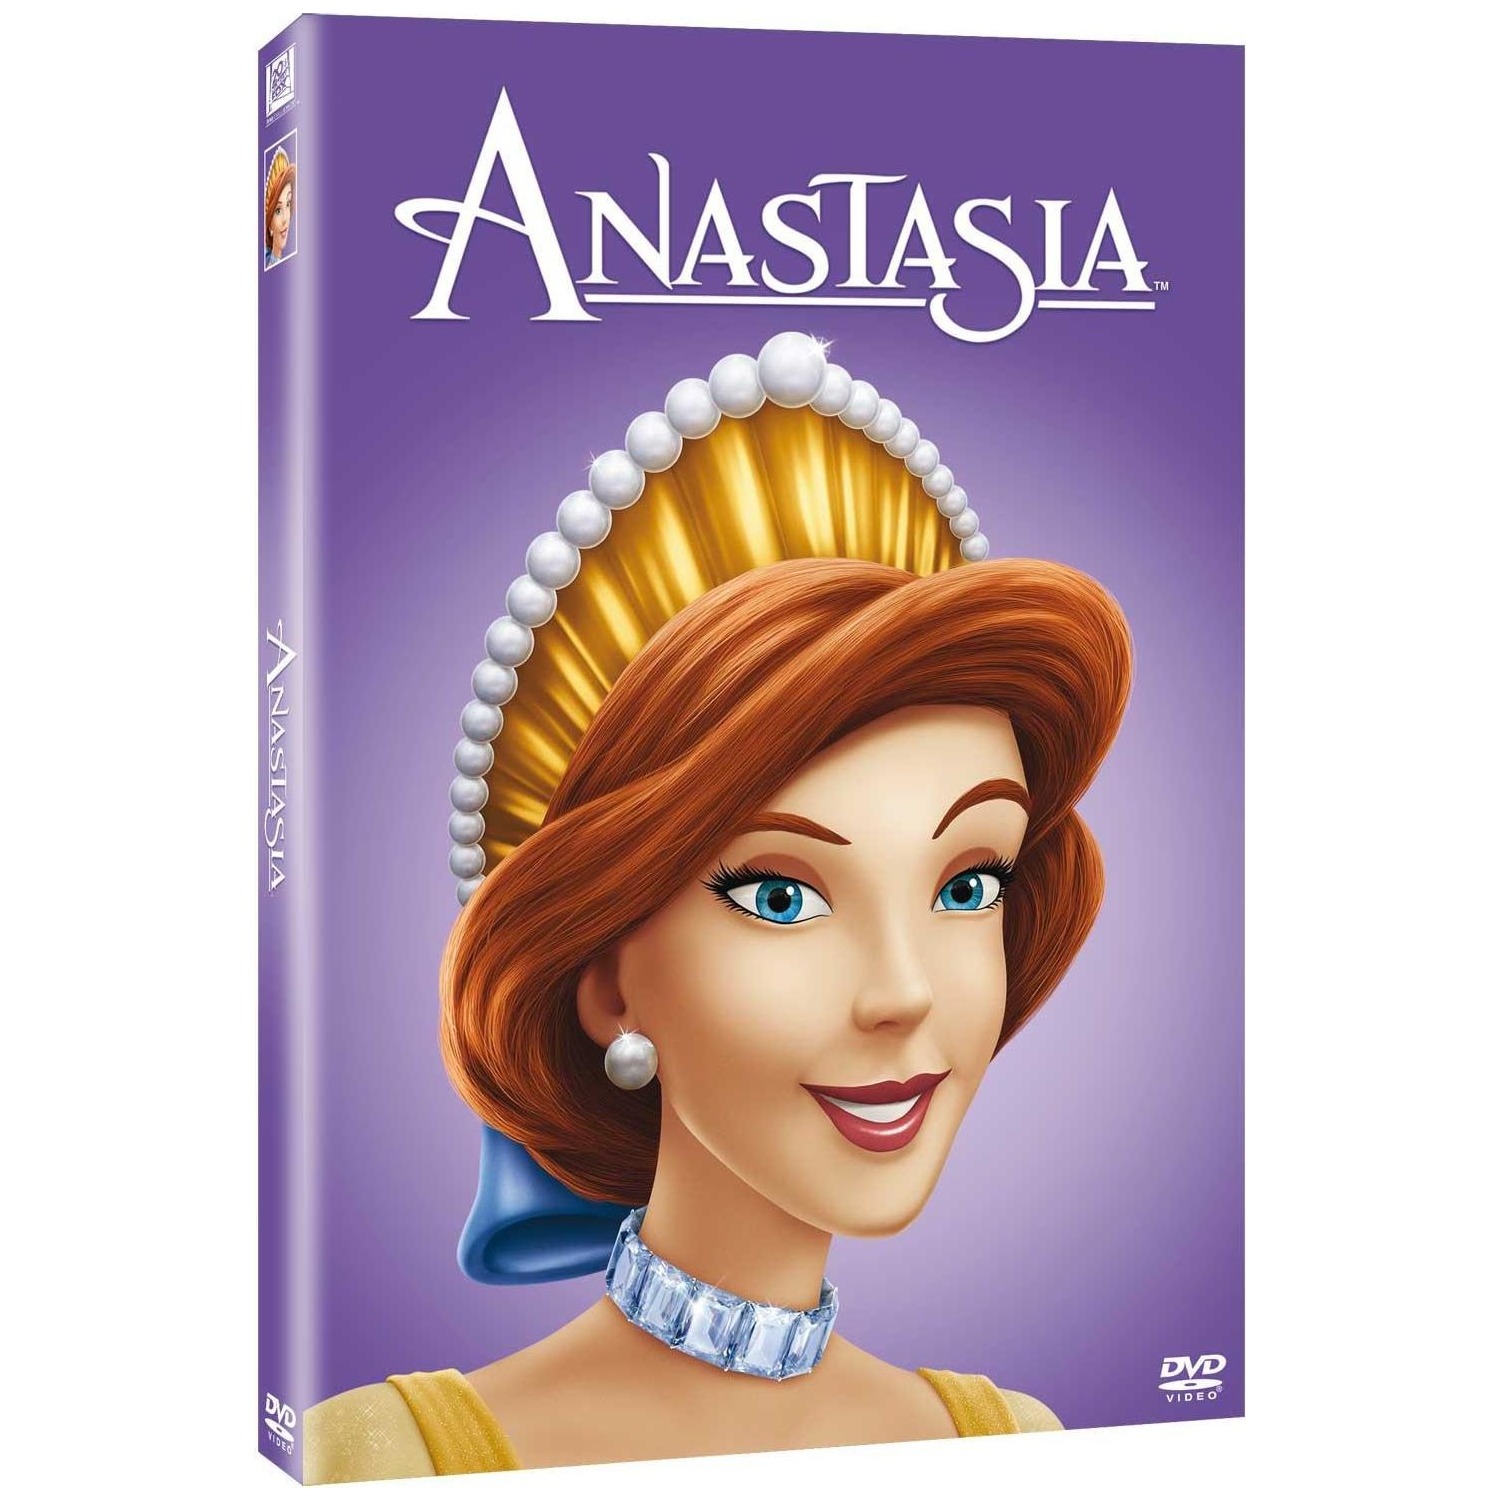 Immagine per DVD Anastasia cartoon da DIMOStore